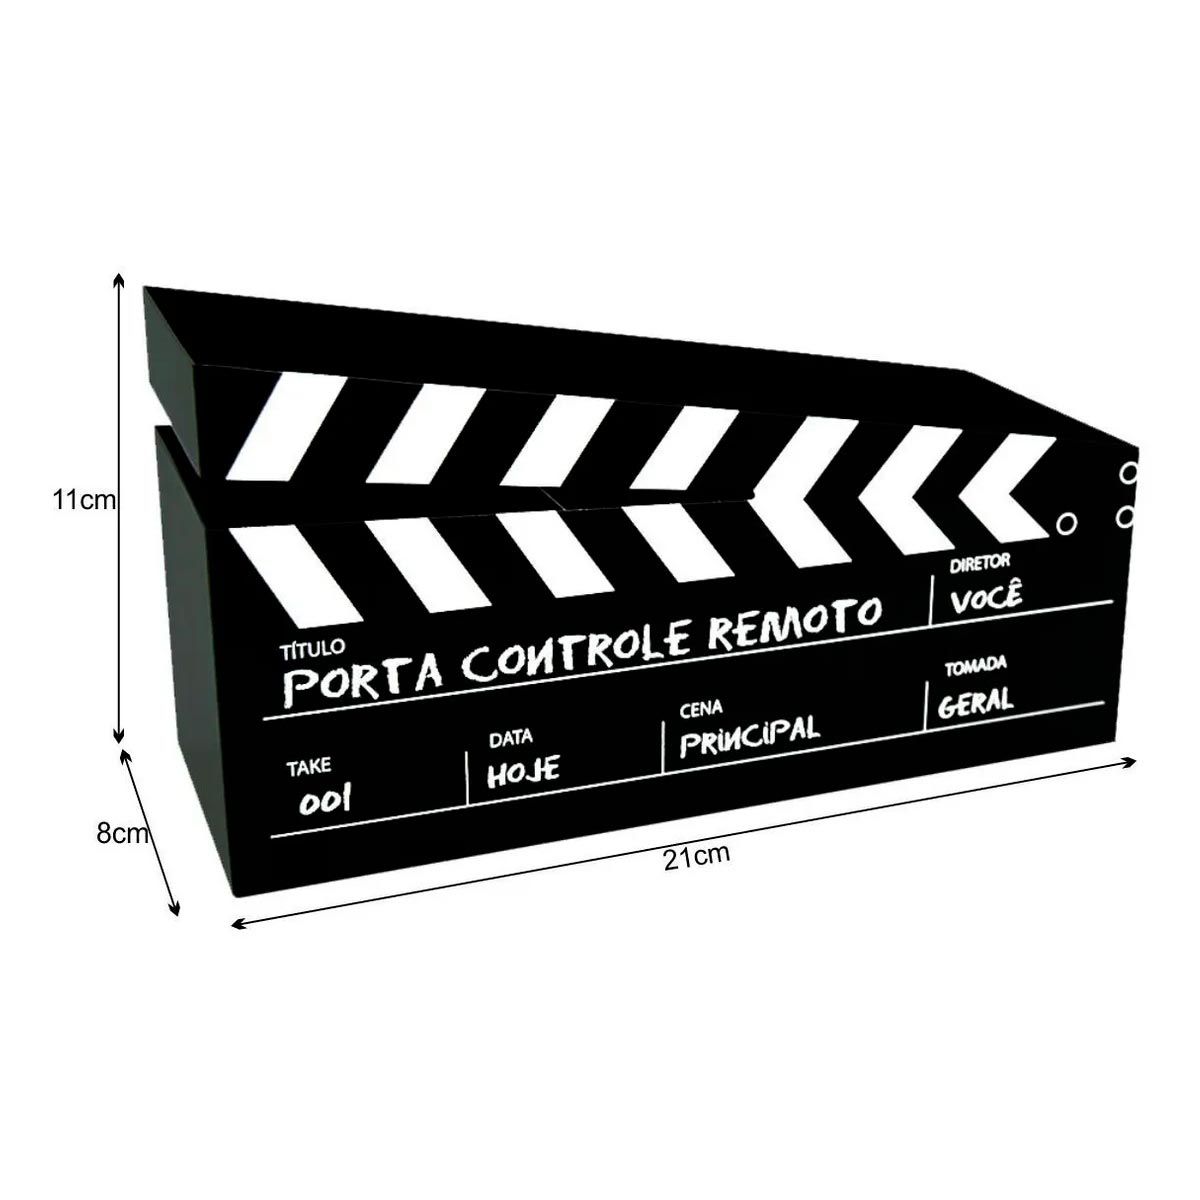 Porta Controle Remoto Cinema - Claquete De Diretor